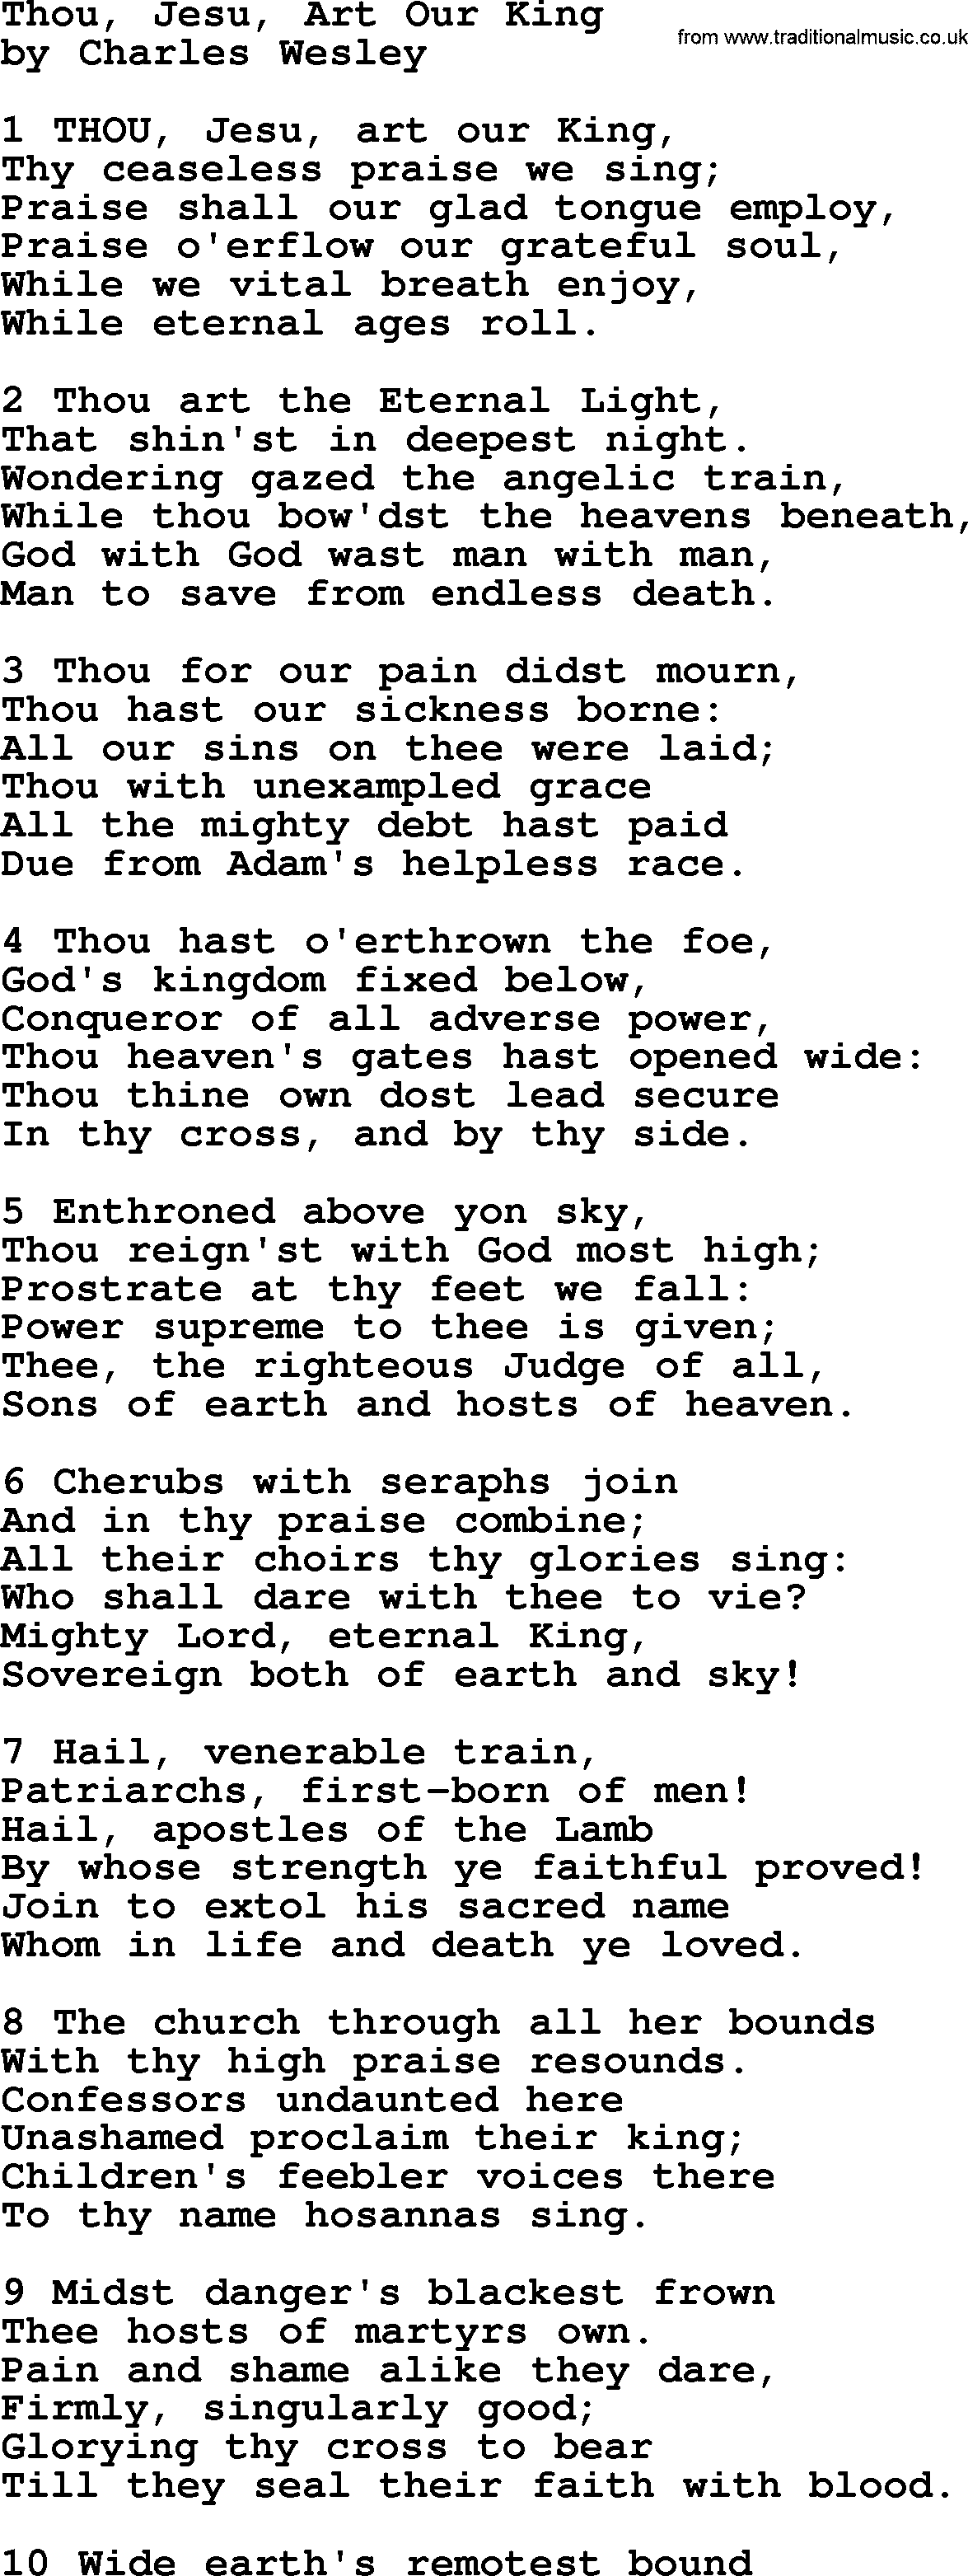 Charles Wesley hymn: Thou, Jesu, Art Our King, lyrics